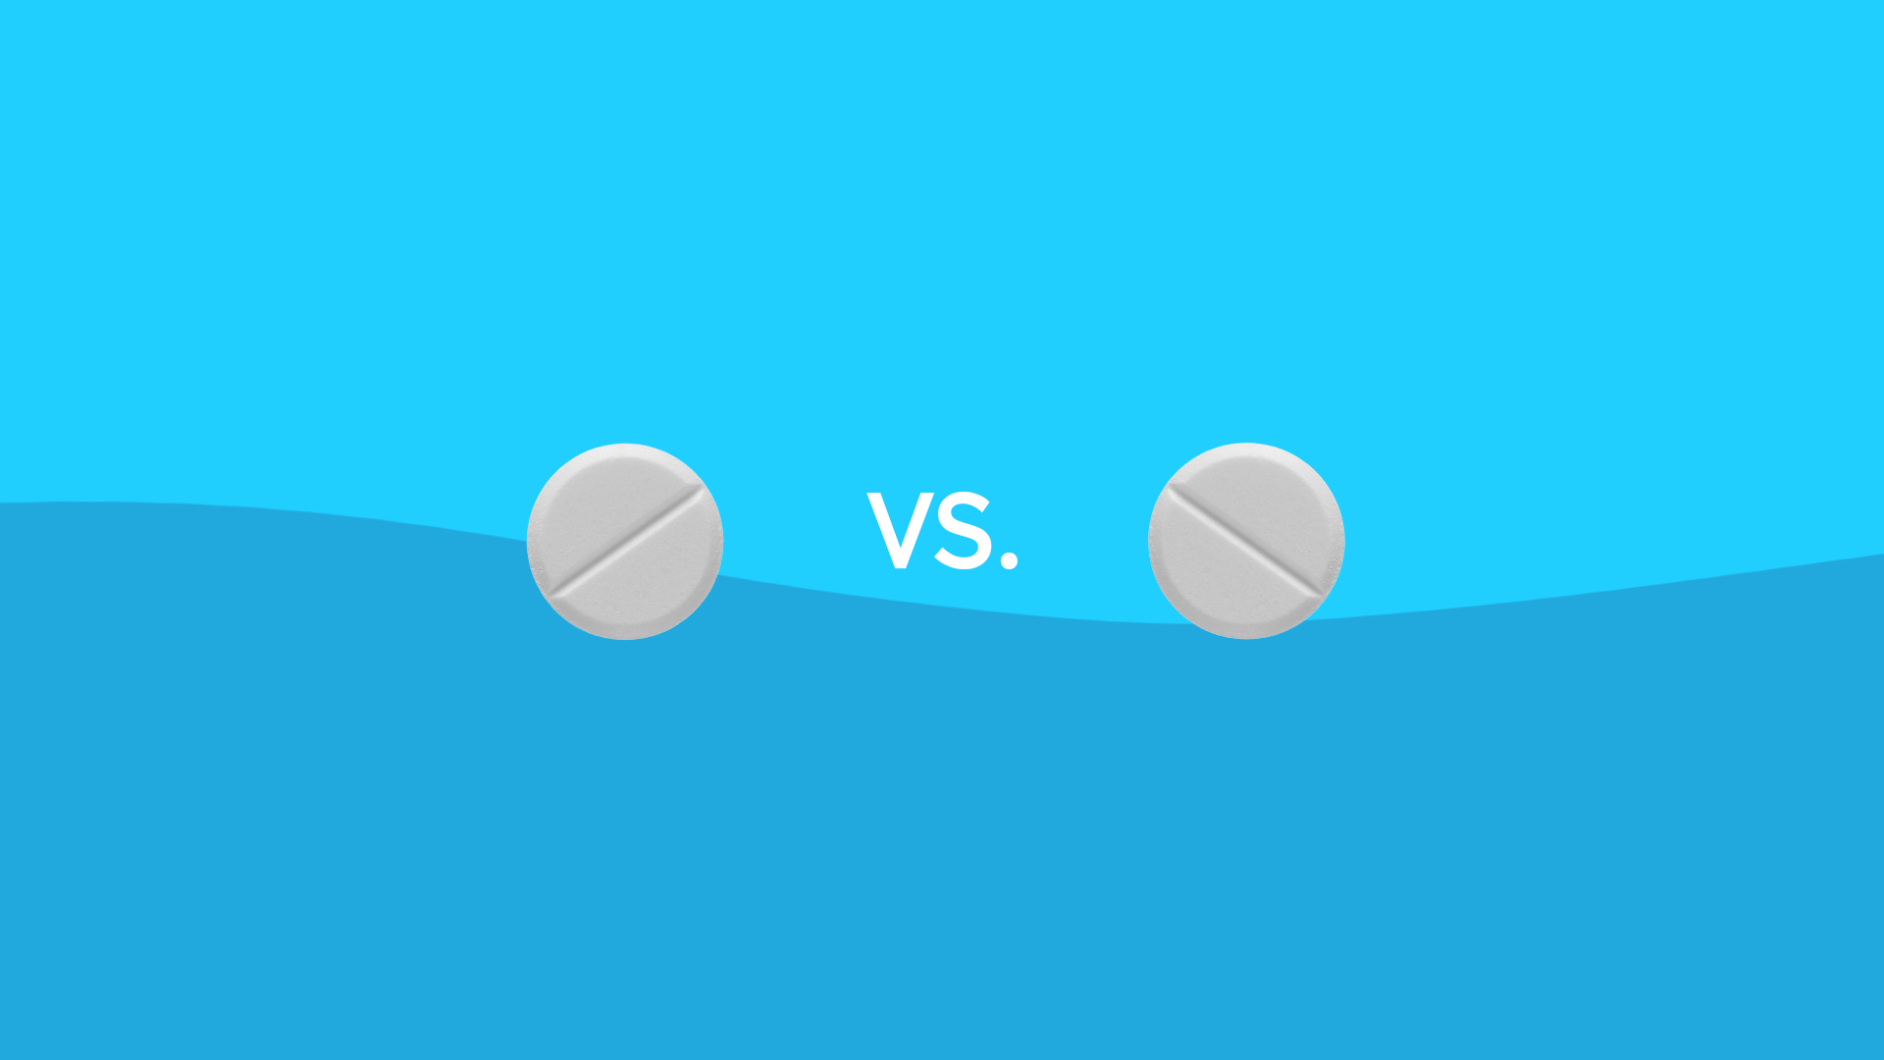 Rx tablets: Zyrtec vs. Claritin drug comparison